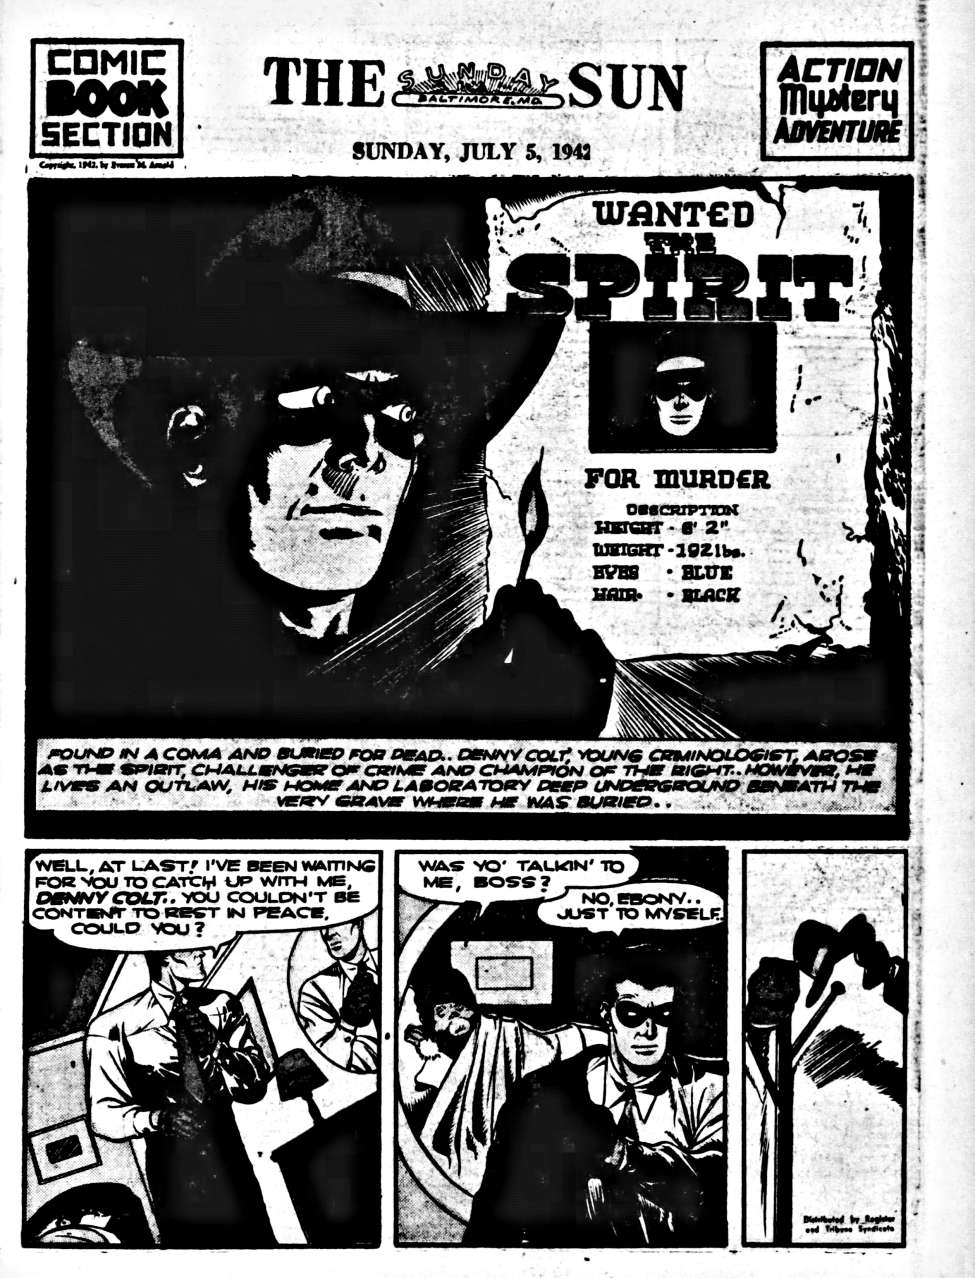 Comic Book Cover For The Spirit (1942-07-05) - Baltimore Sun (b/w)